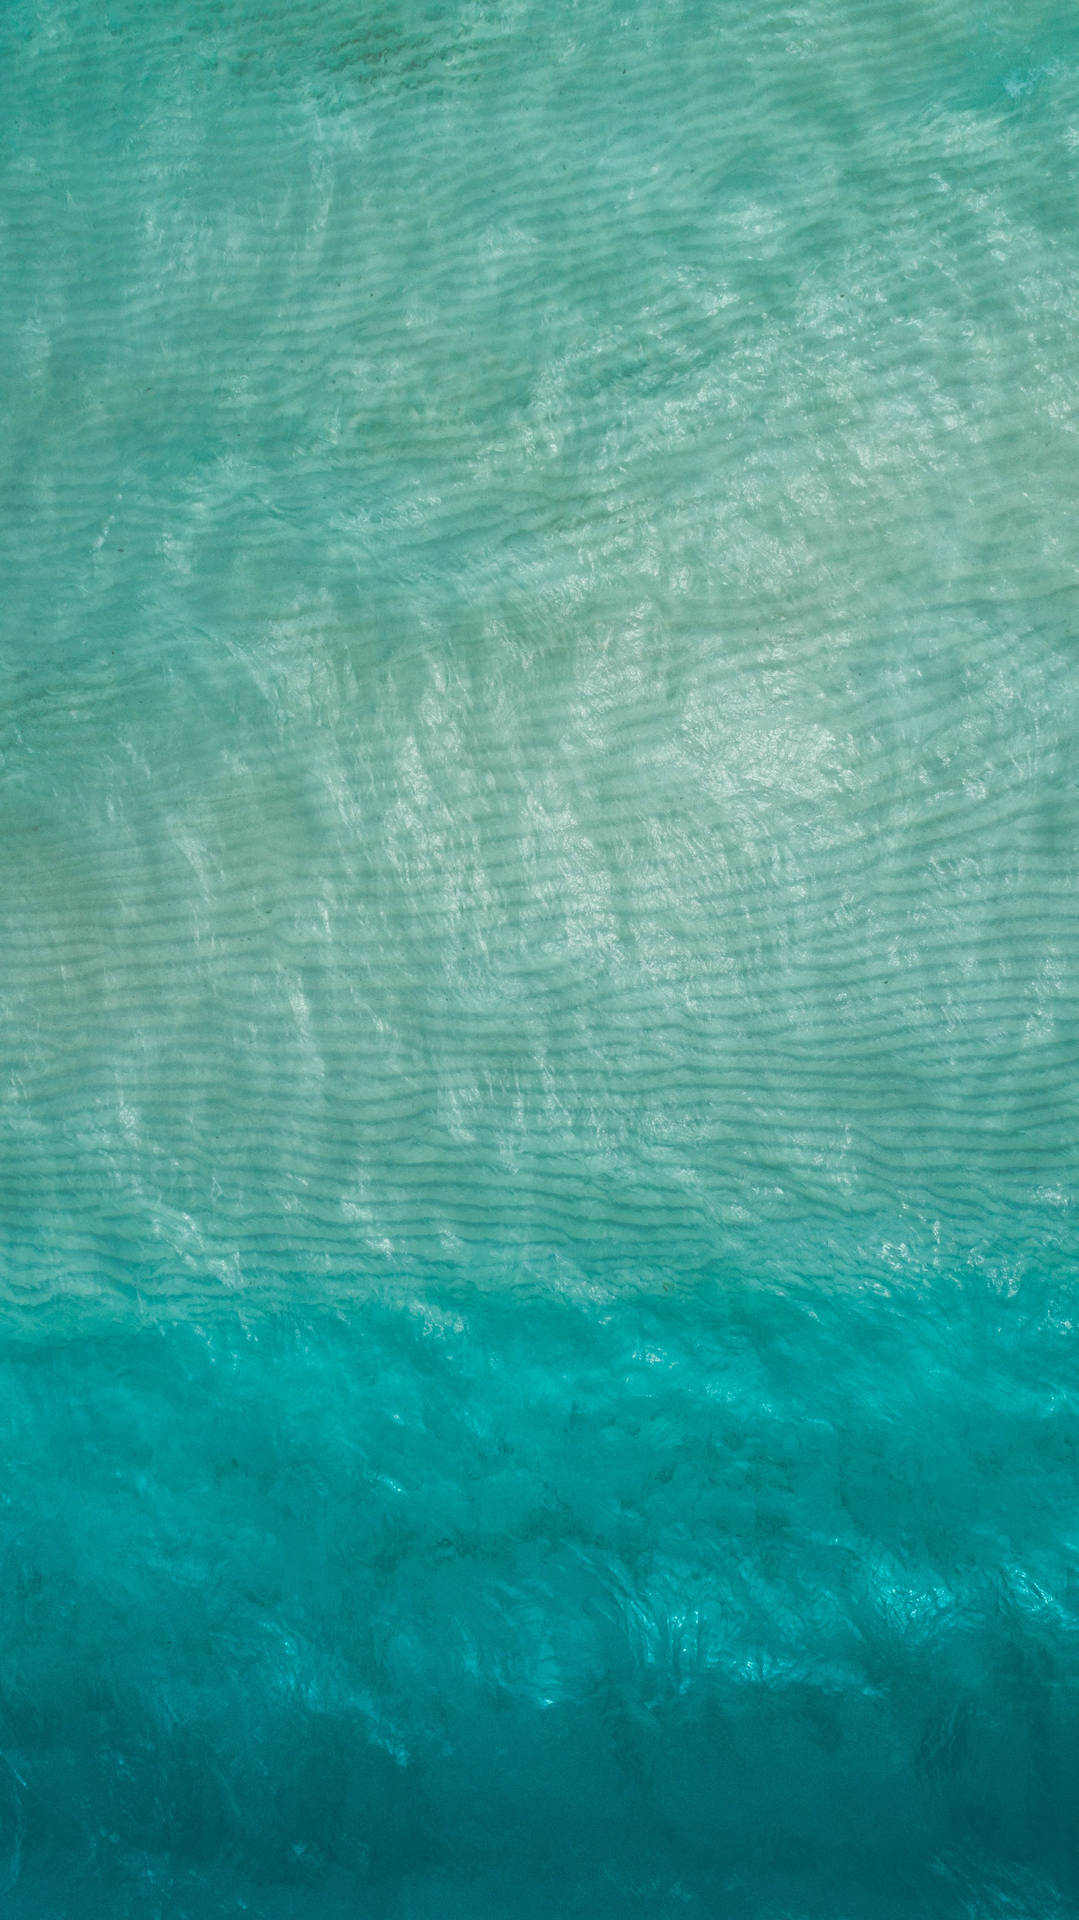 Calm Ocean Blue Waters Wallpaper